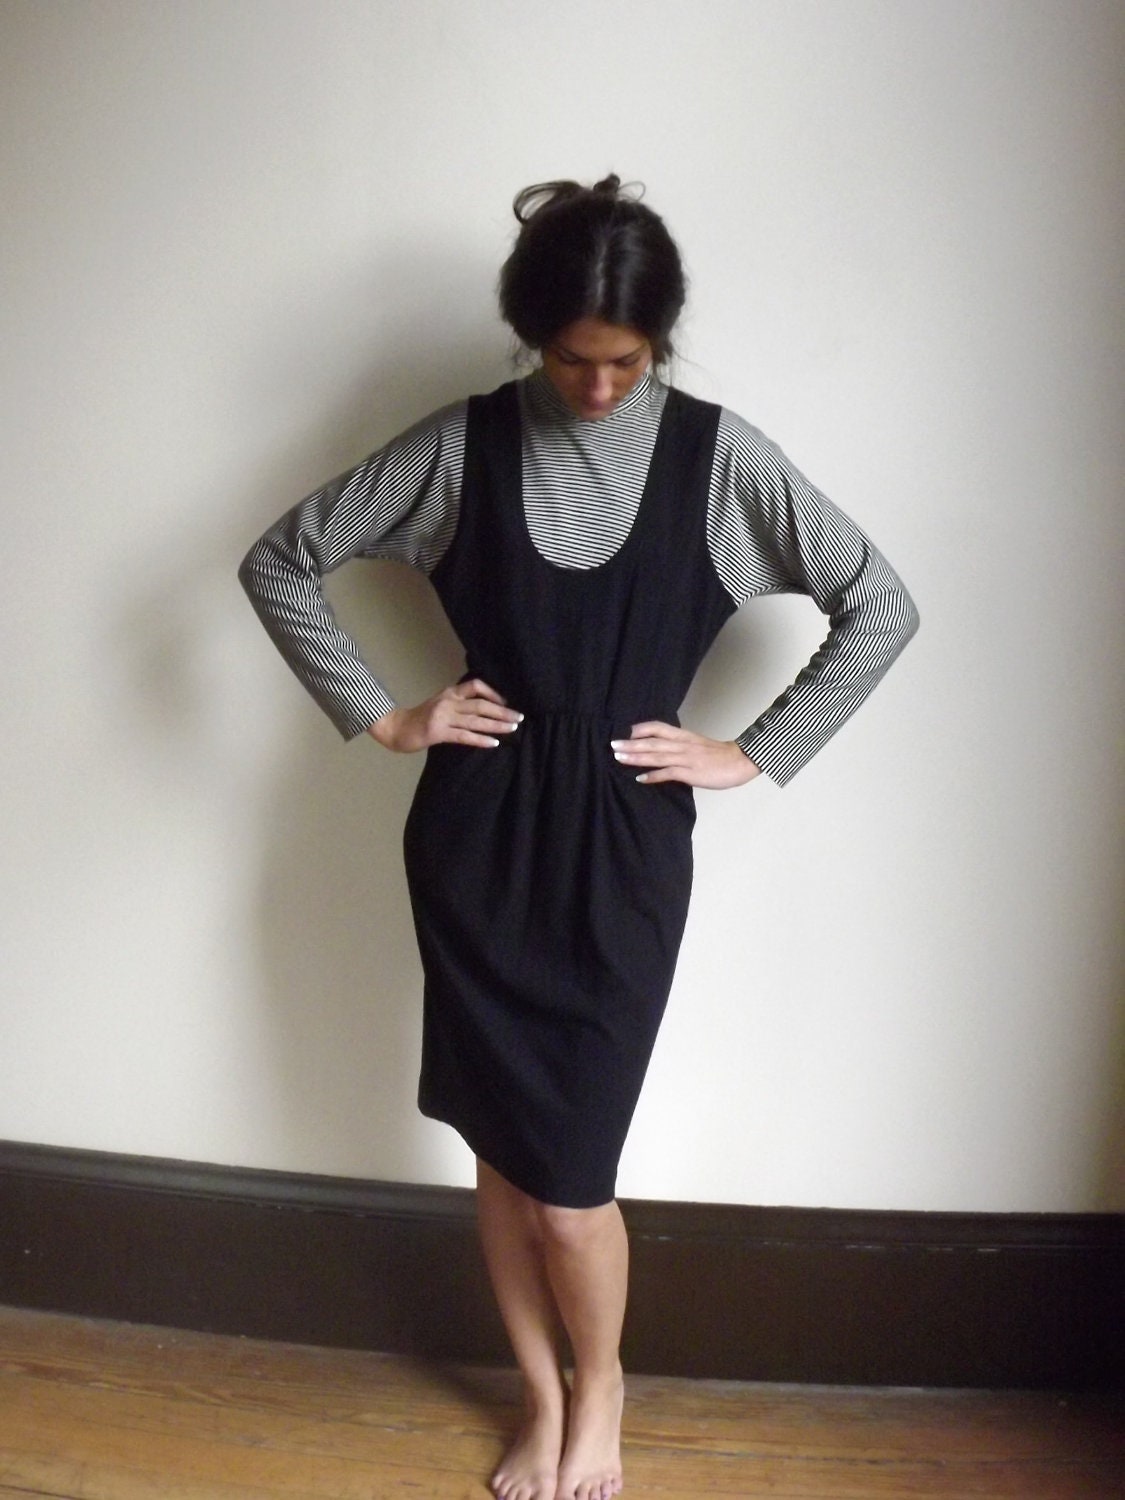 Black Long Sleeve Turtleneck Sweater Dress